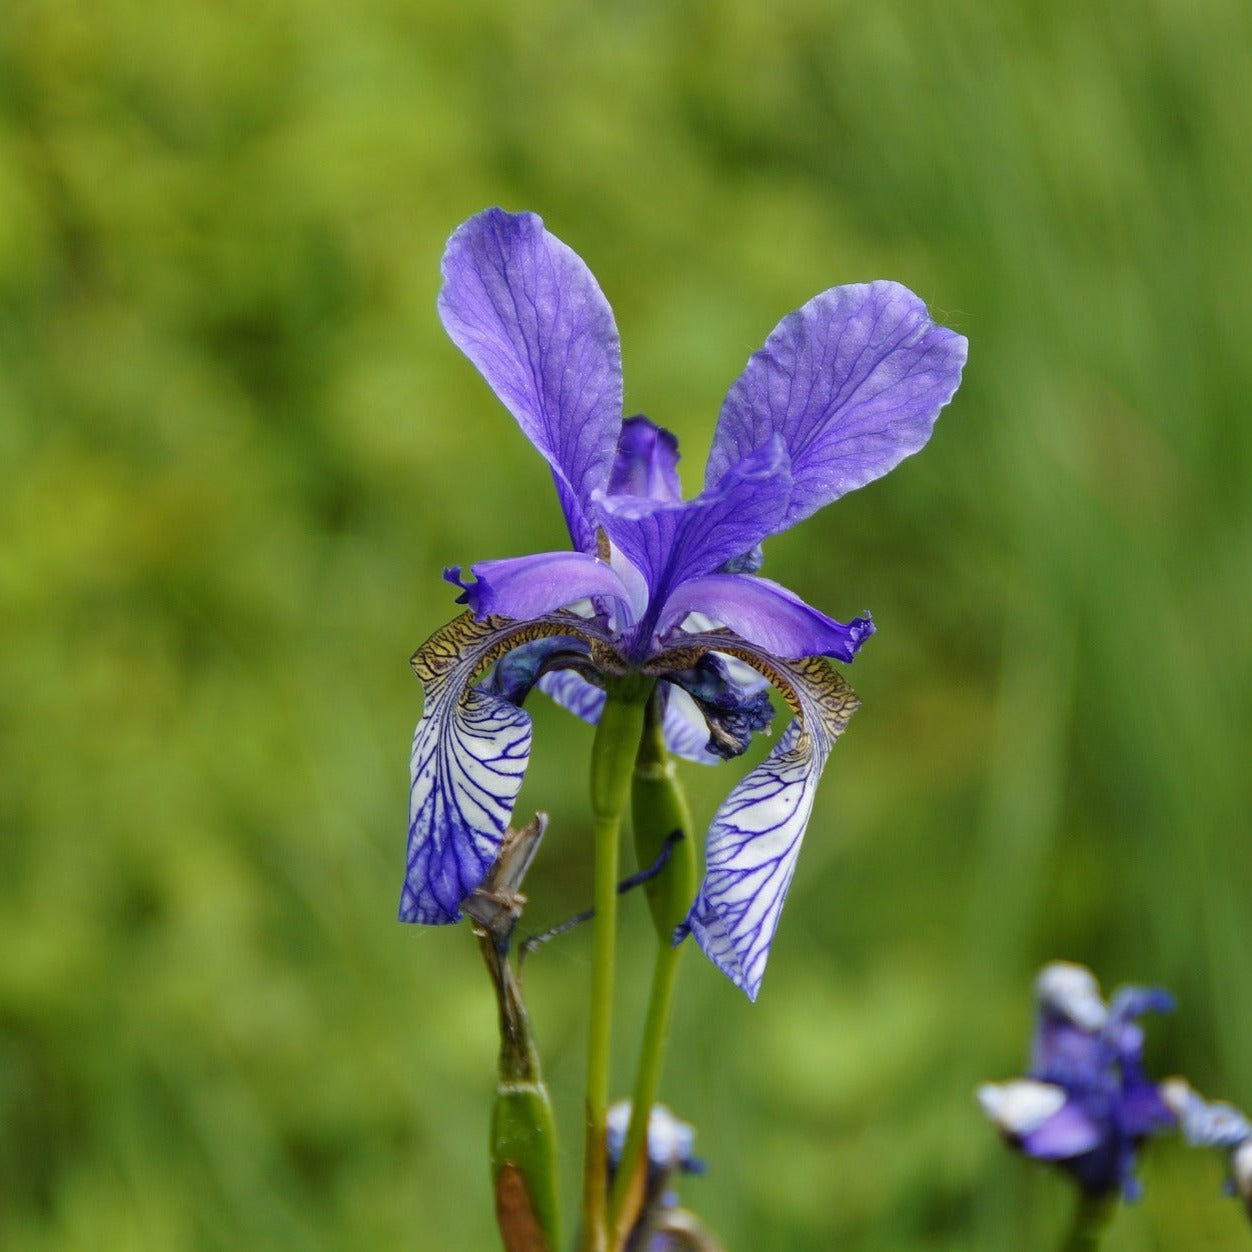 Iris sibirica hubbard - Volume 3L / 30-40cm